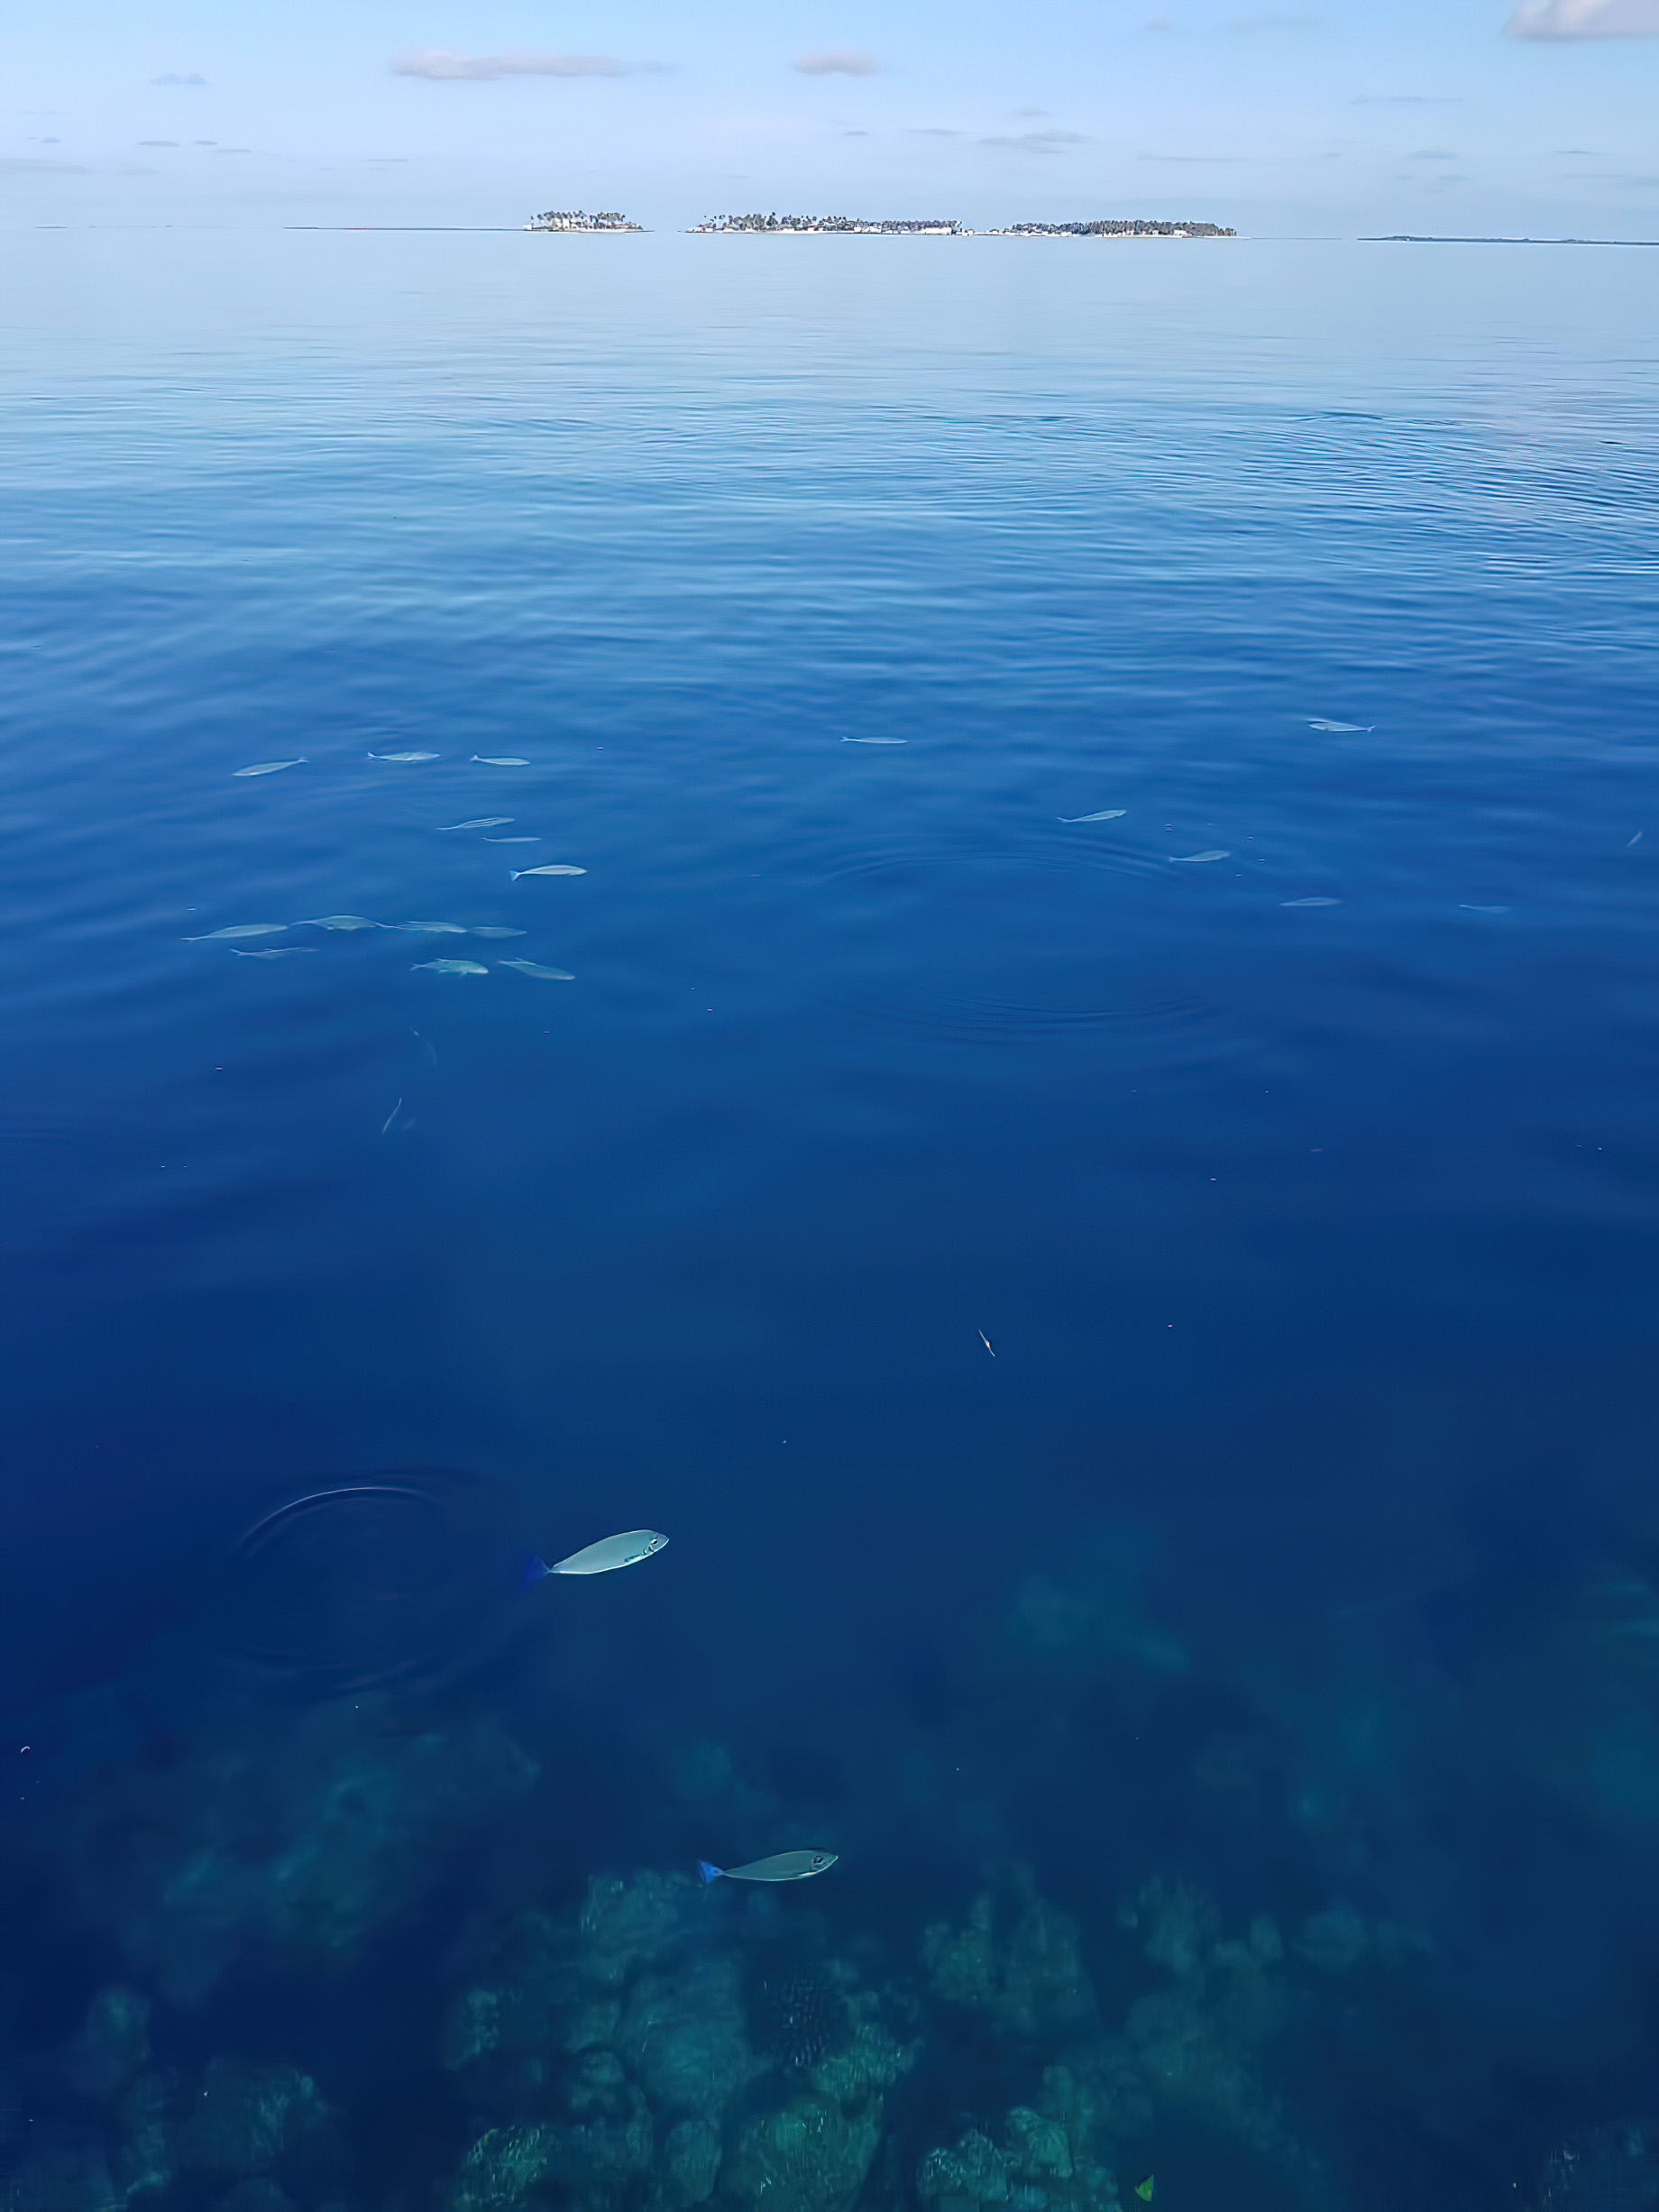 Cheval Blanc Randheli Resort – Noonu Atoll, Maldives – Resort Ocean View Fish in Water